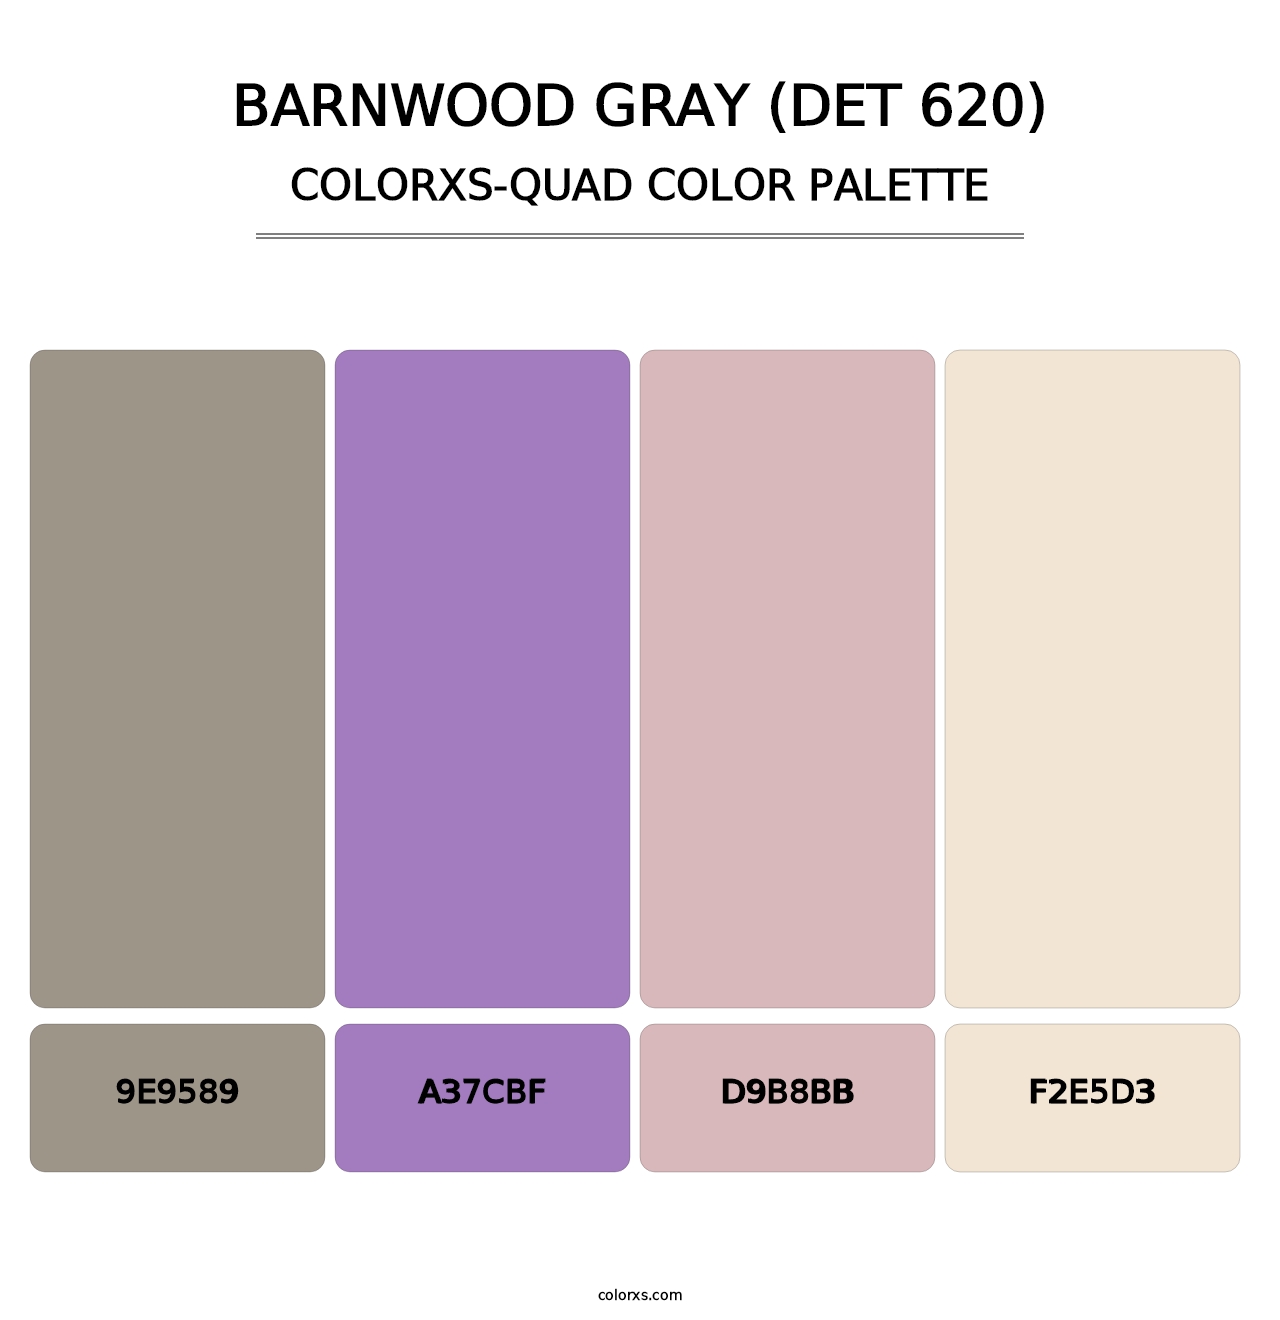 Barnwood Gray (DET 620) - Colorxs Quad Palette